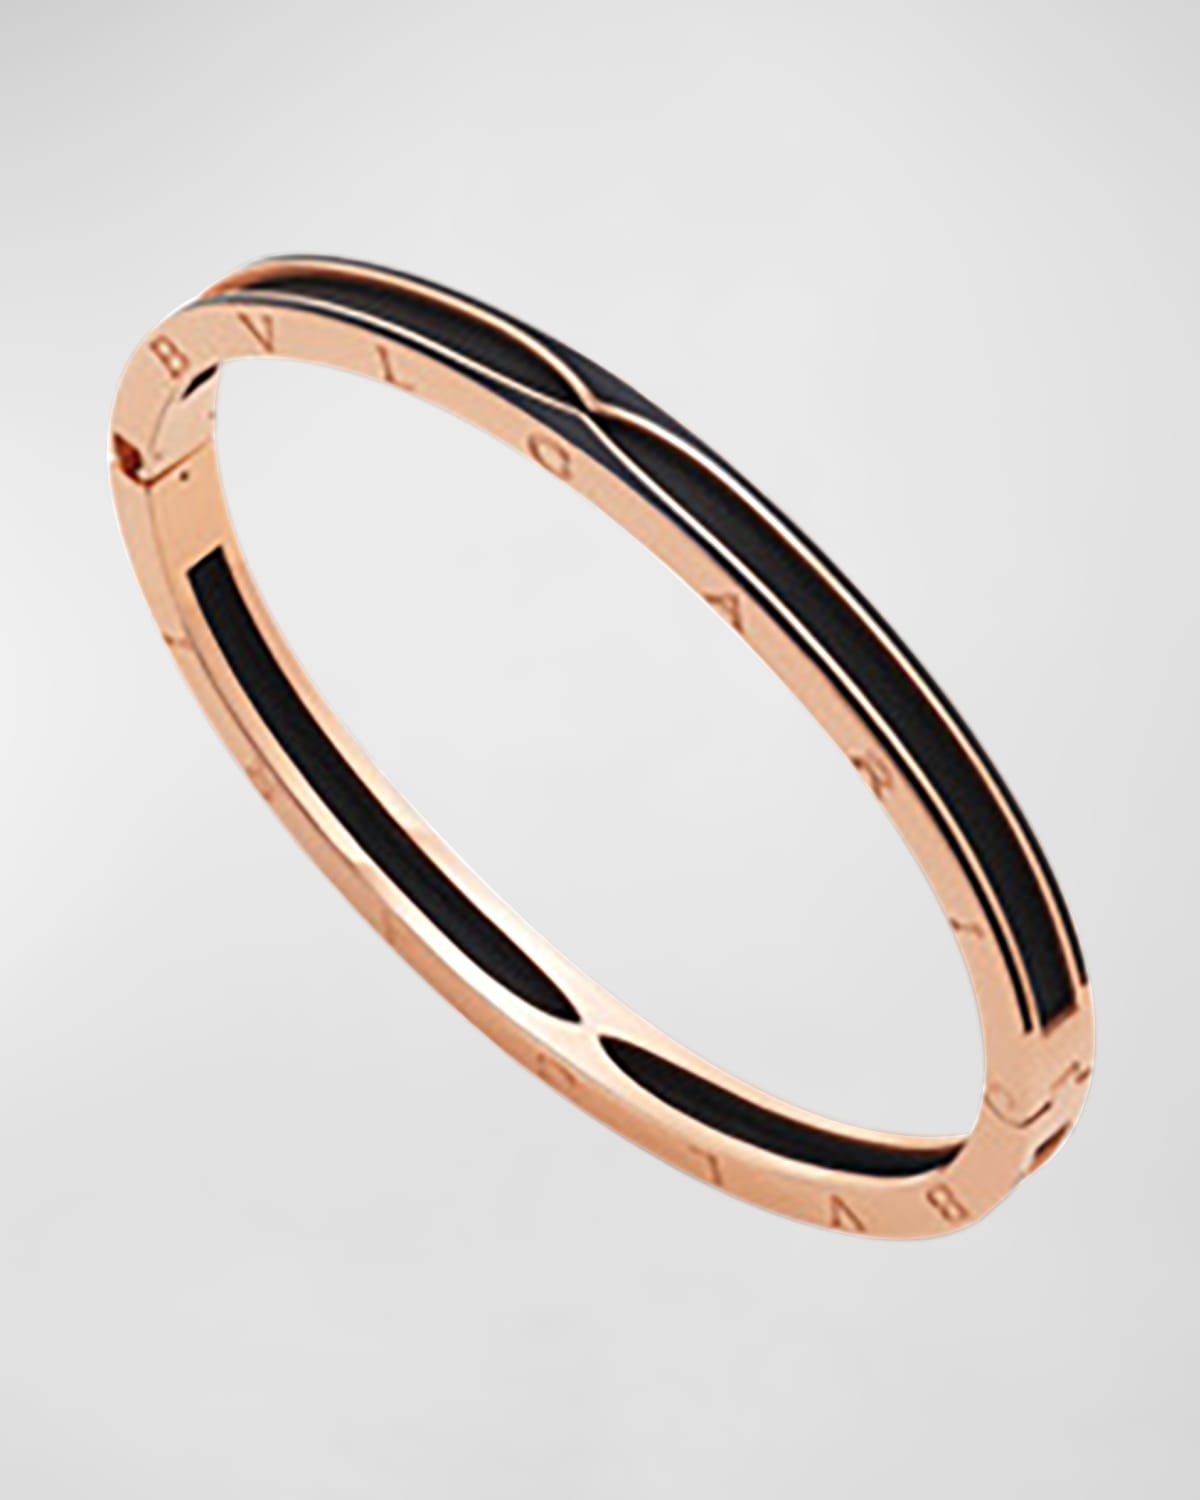 B.Zero1 Pink Gold Bracelet with Matte Black Ceramic Edge, Size L